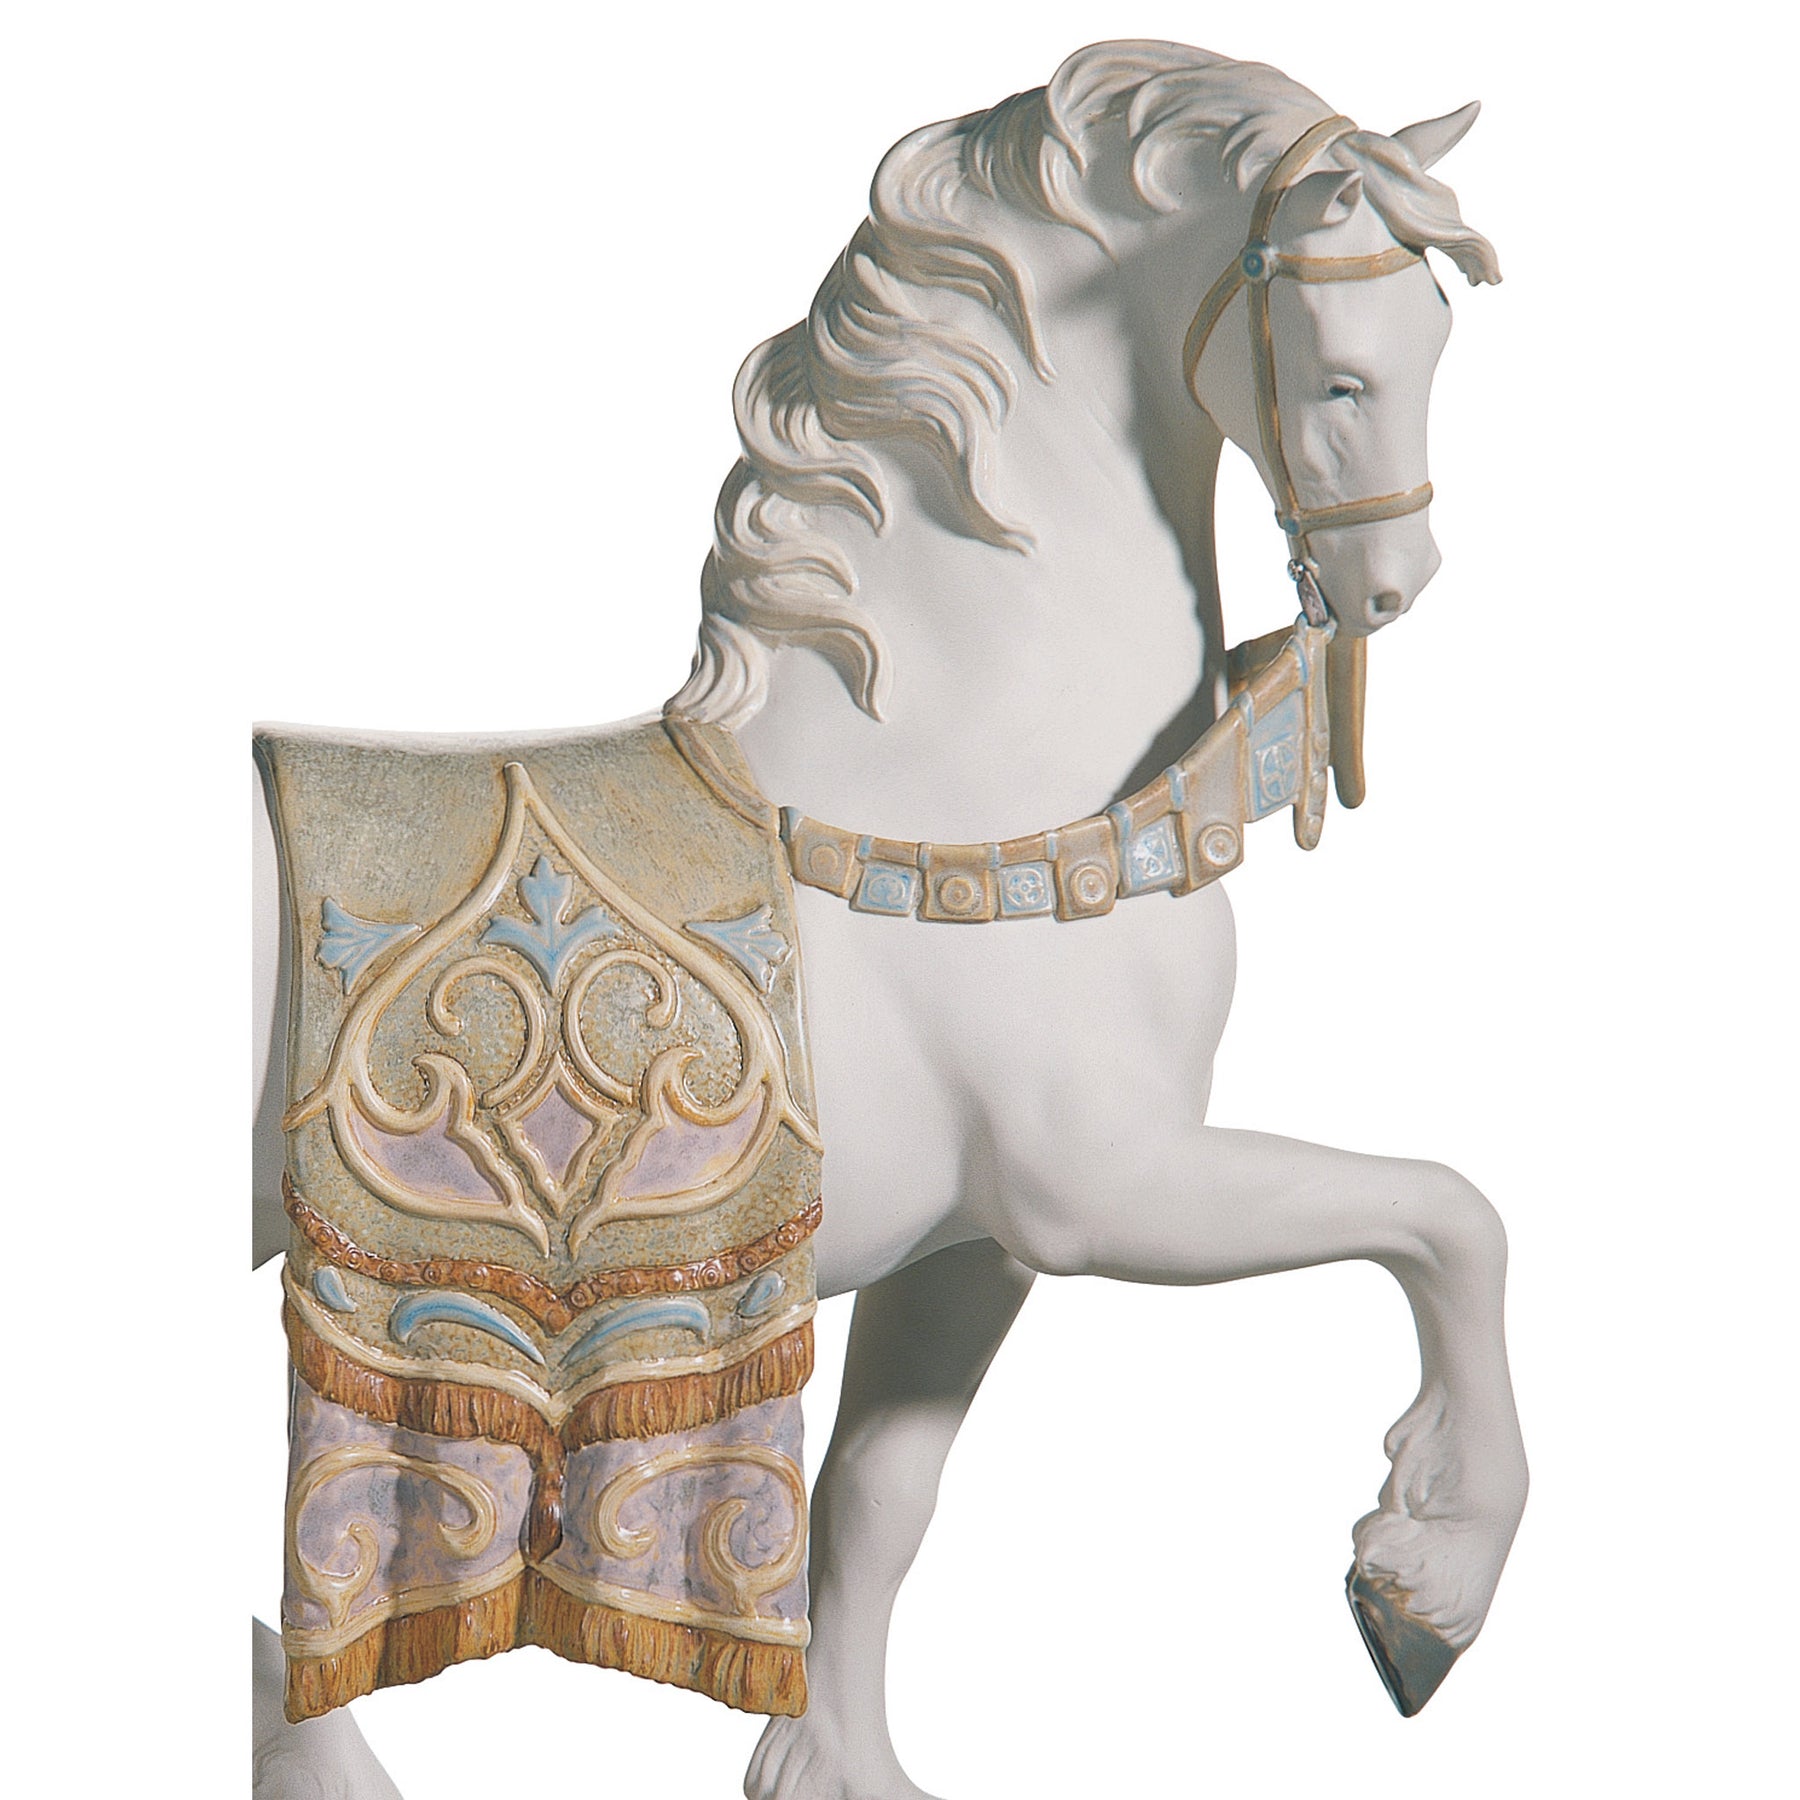 Lladro Unbreakable Spirit Horse Sculpture 01008762